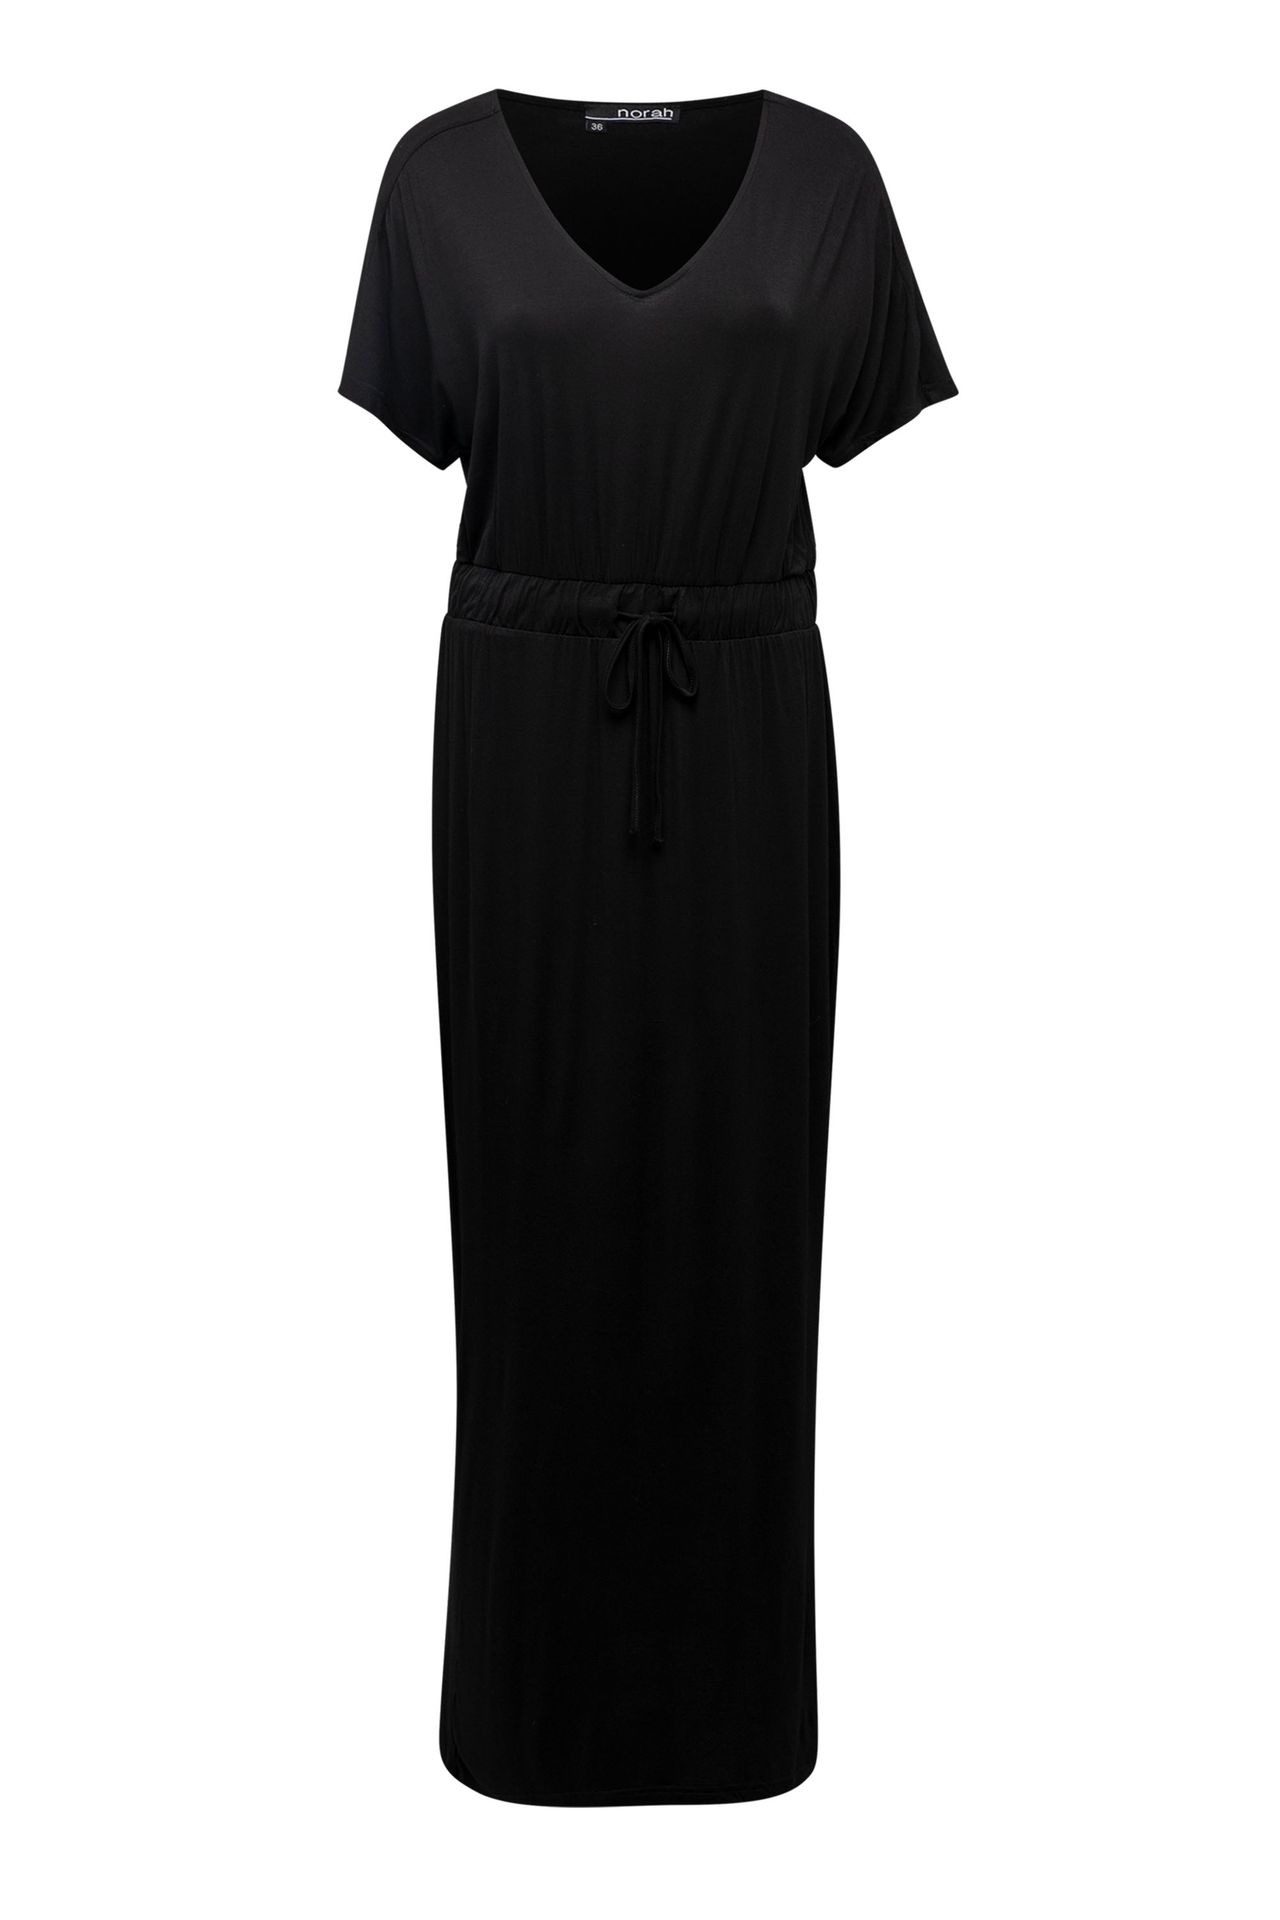 Norah Maxi jurk zwart black 213669-001